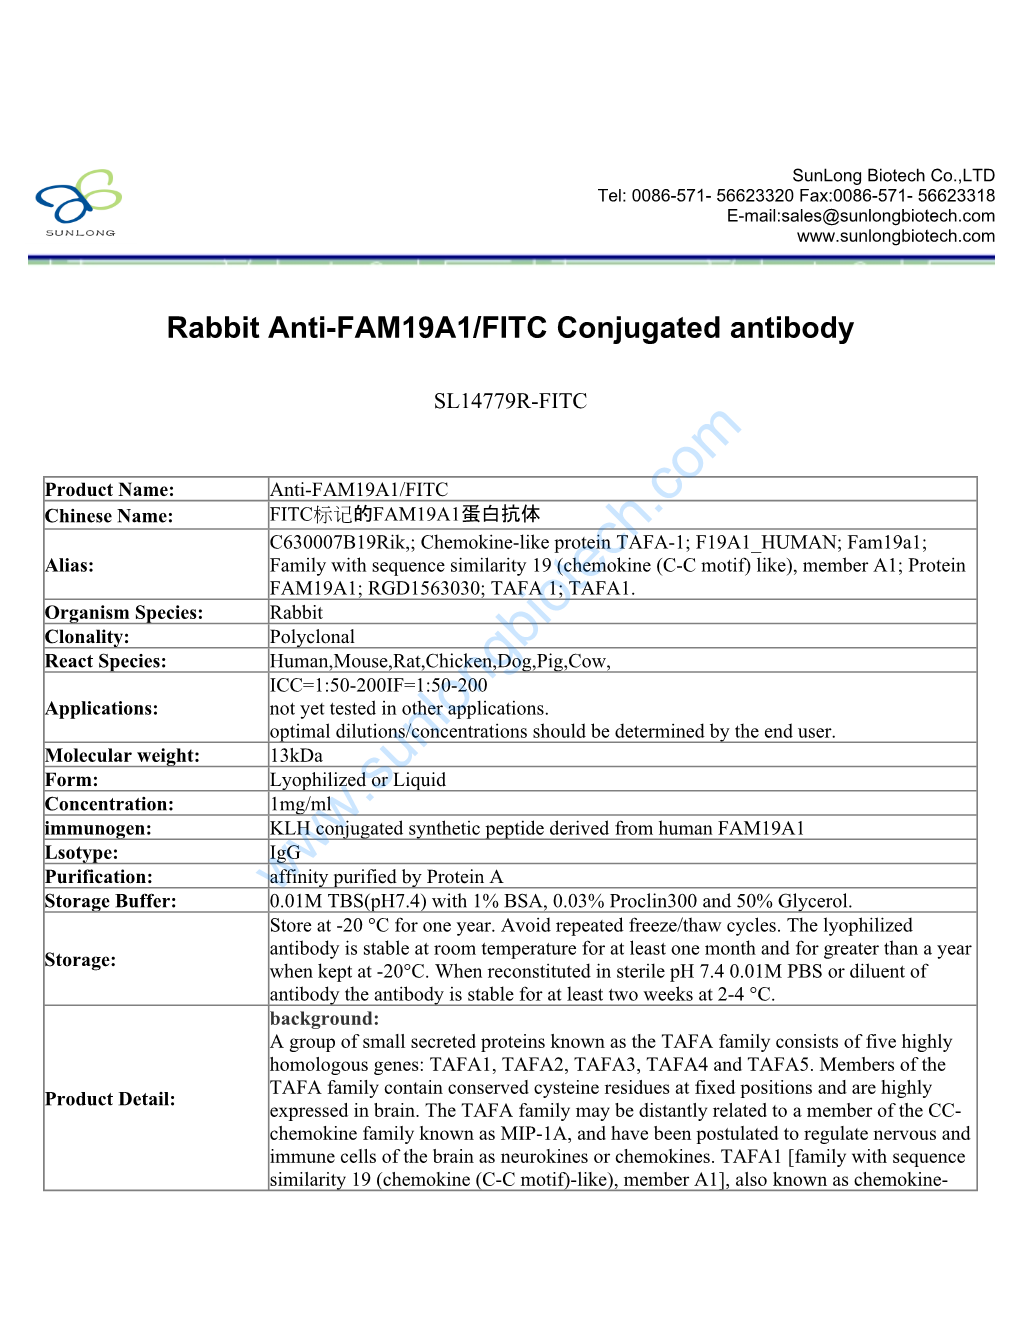 Rabbit Anti-FAM19A1/FITC Conjugated Antibody-SL14779R